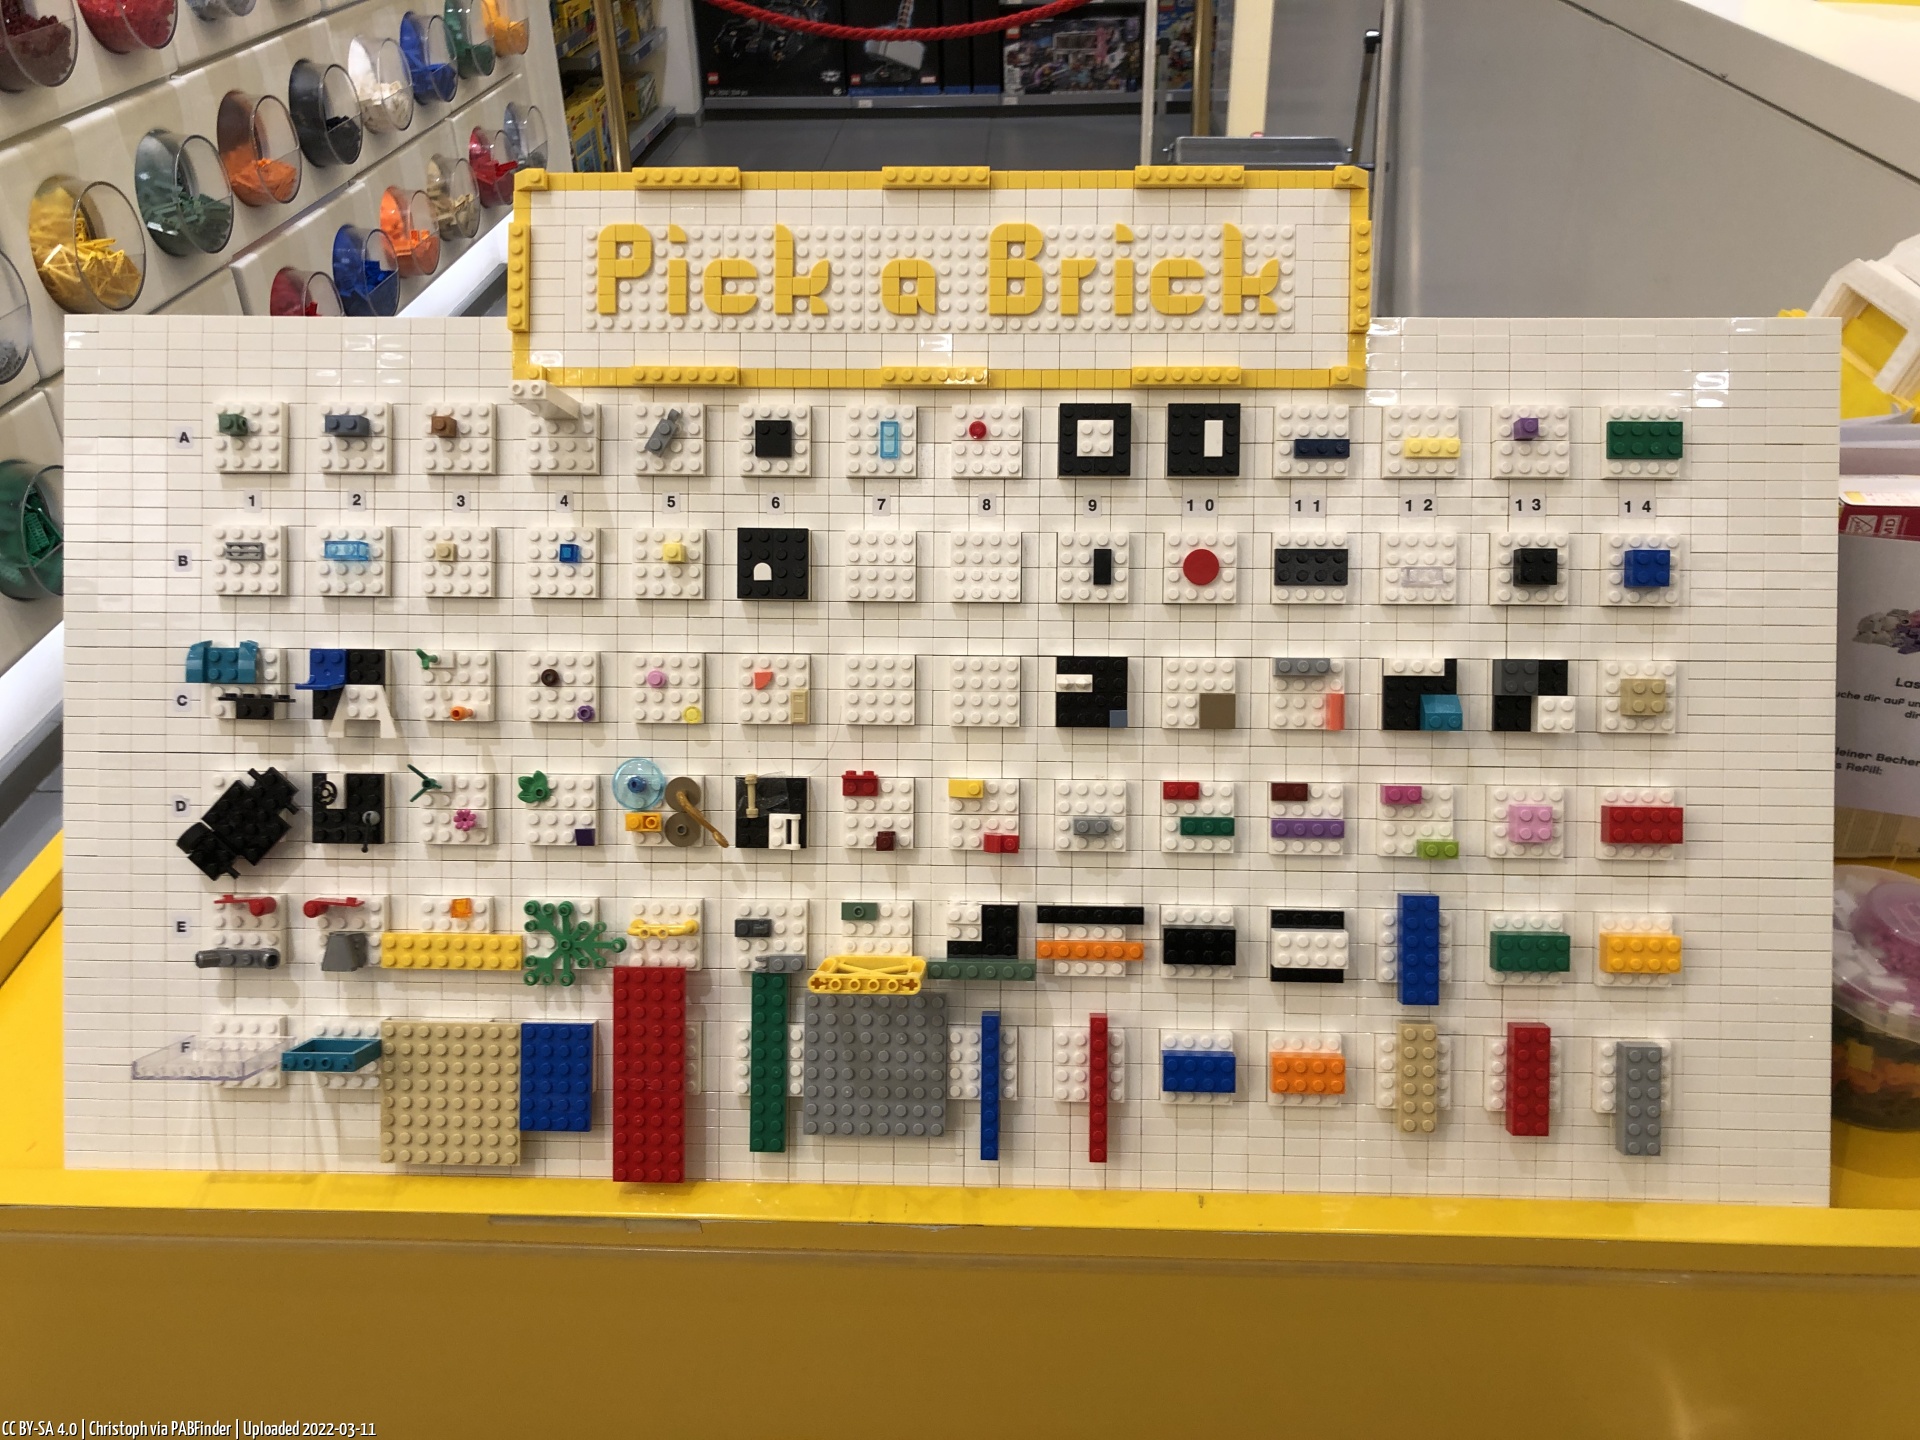 Pick a Brick Hamburg (Christoph, 3/11/22, 7:47:00 PM)